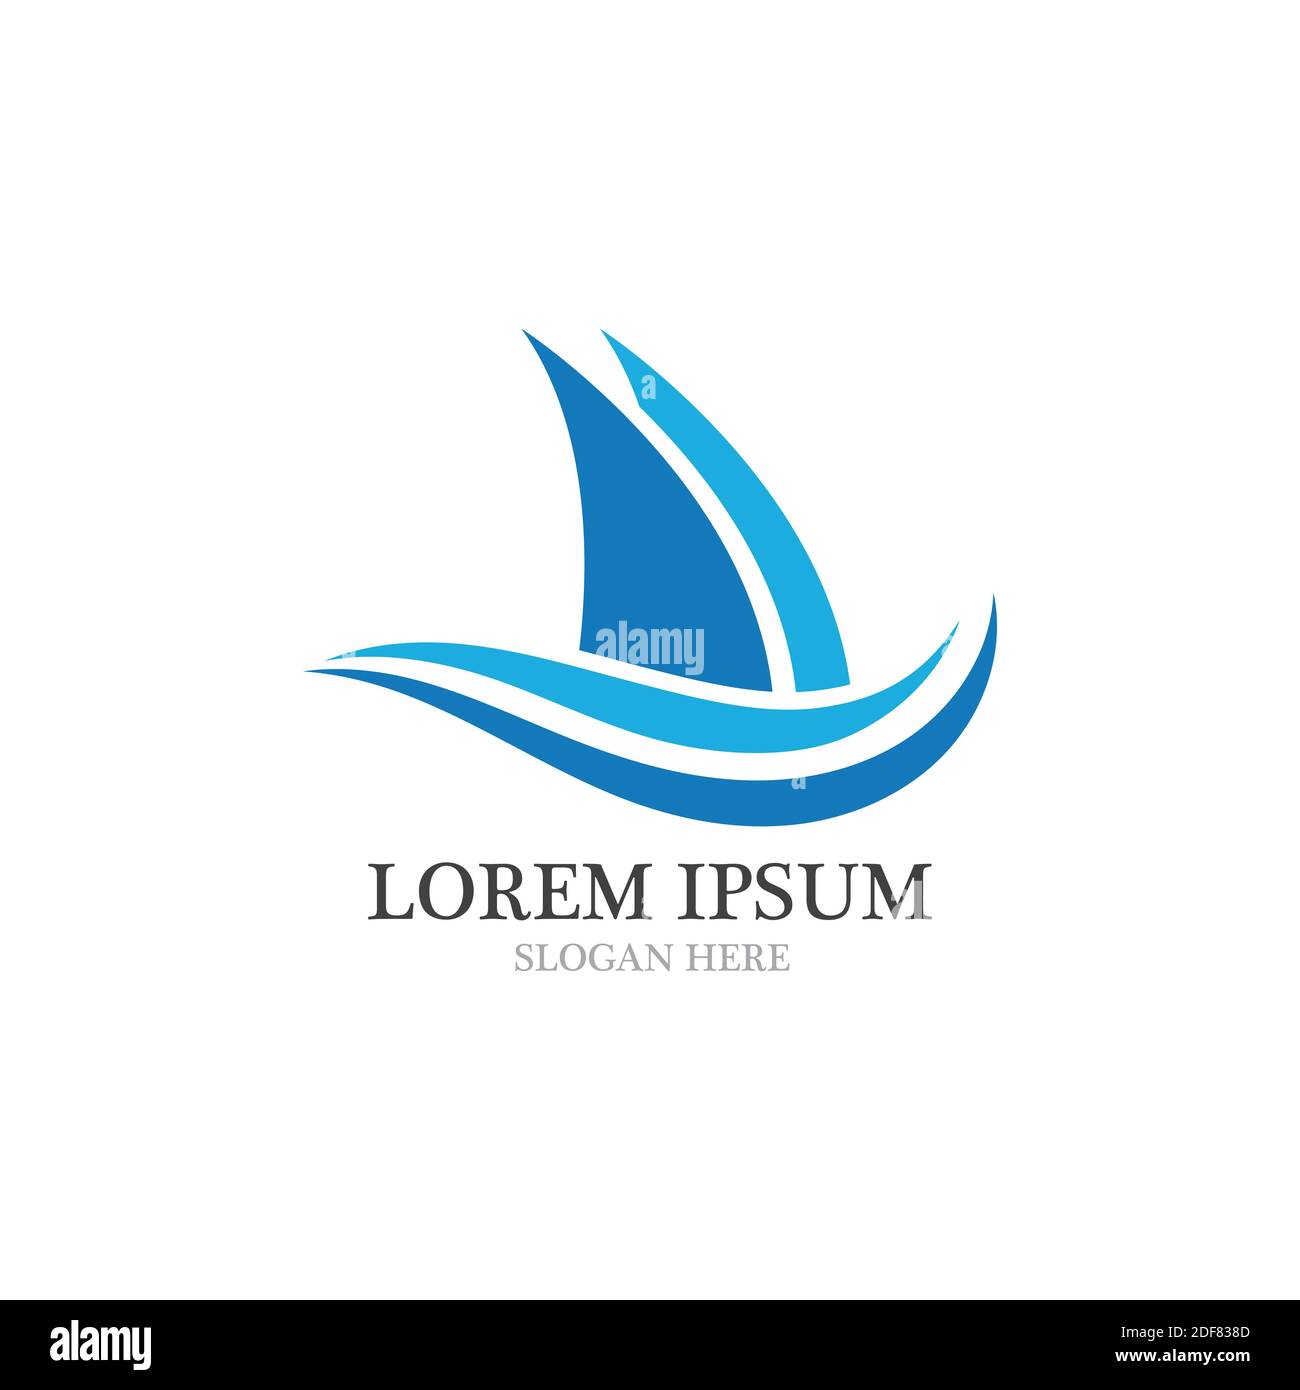 Cruise ship logo images illustration design Stock Vector Image & Art ...